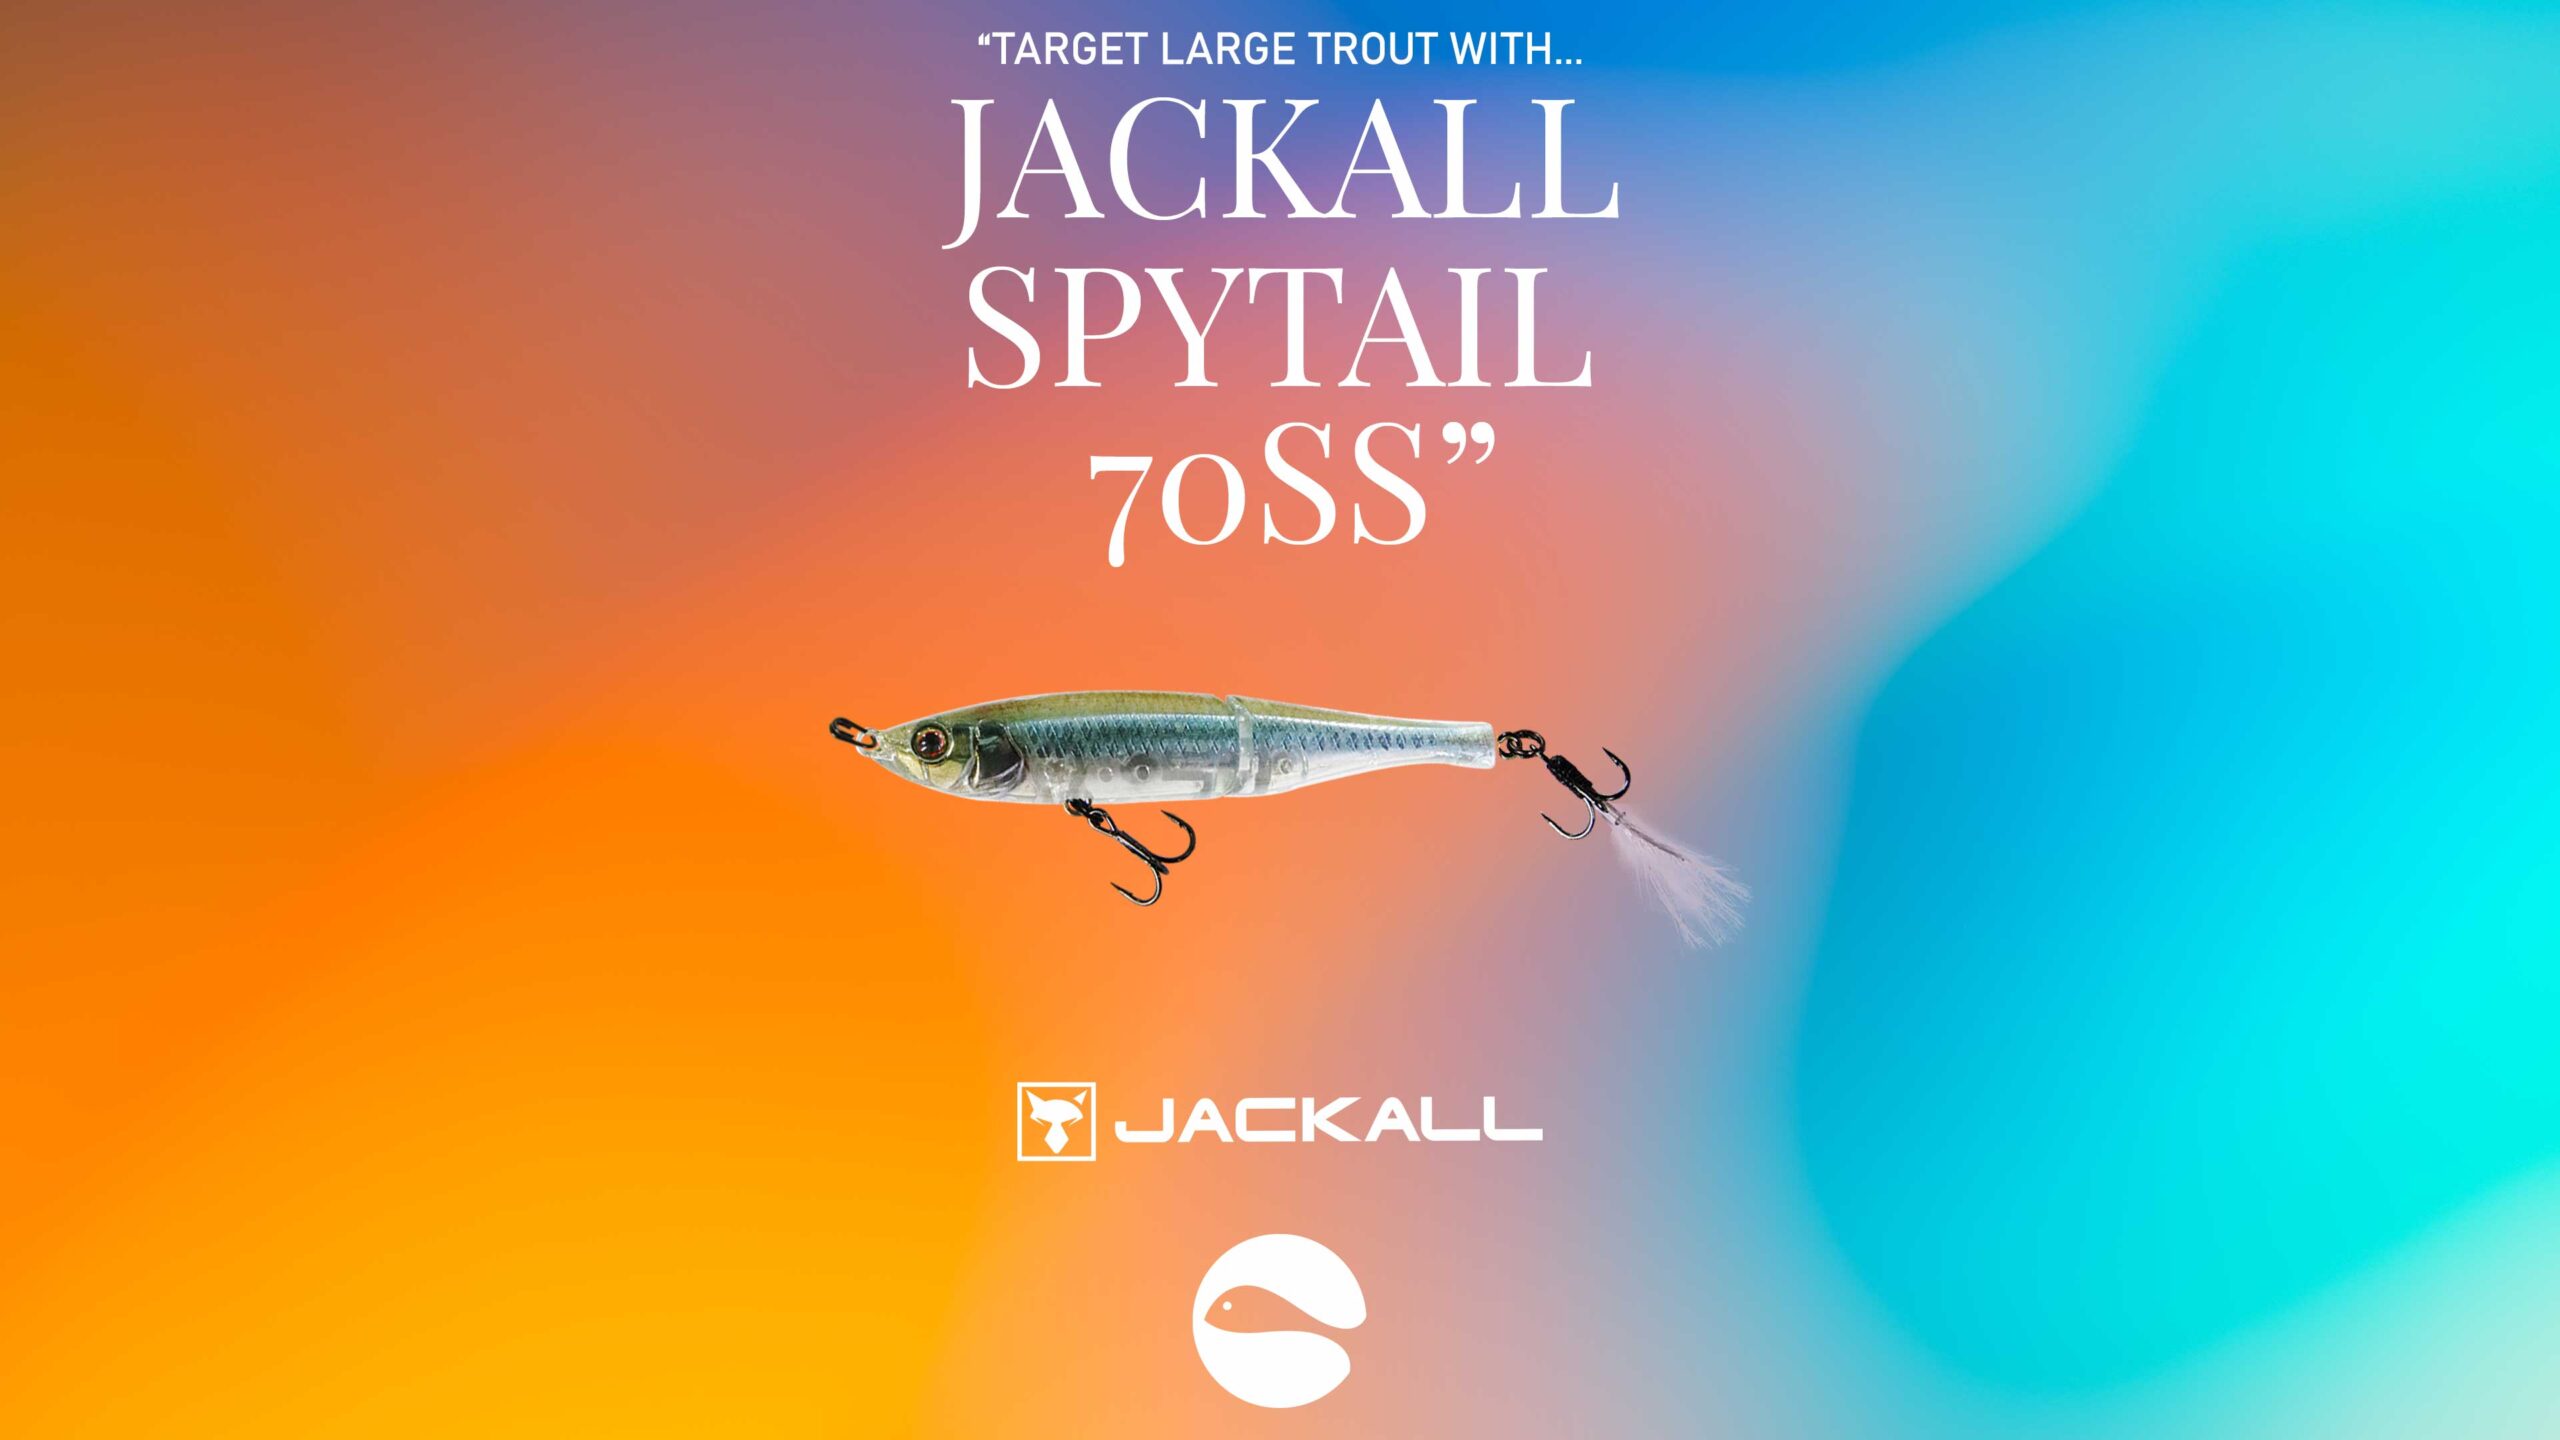 Jackall Spytail mobile